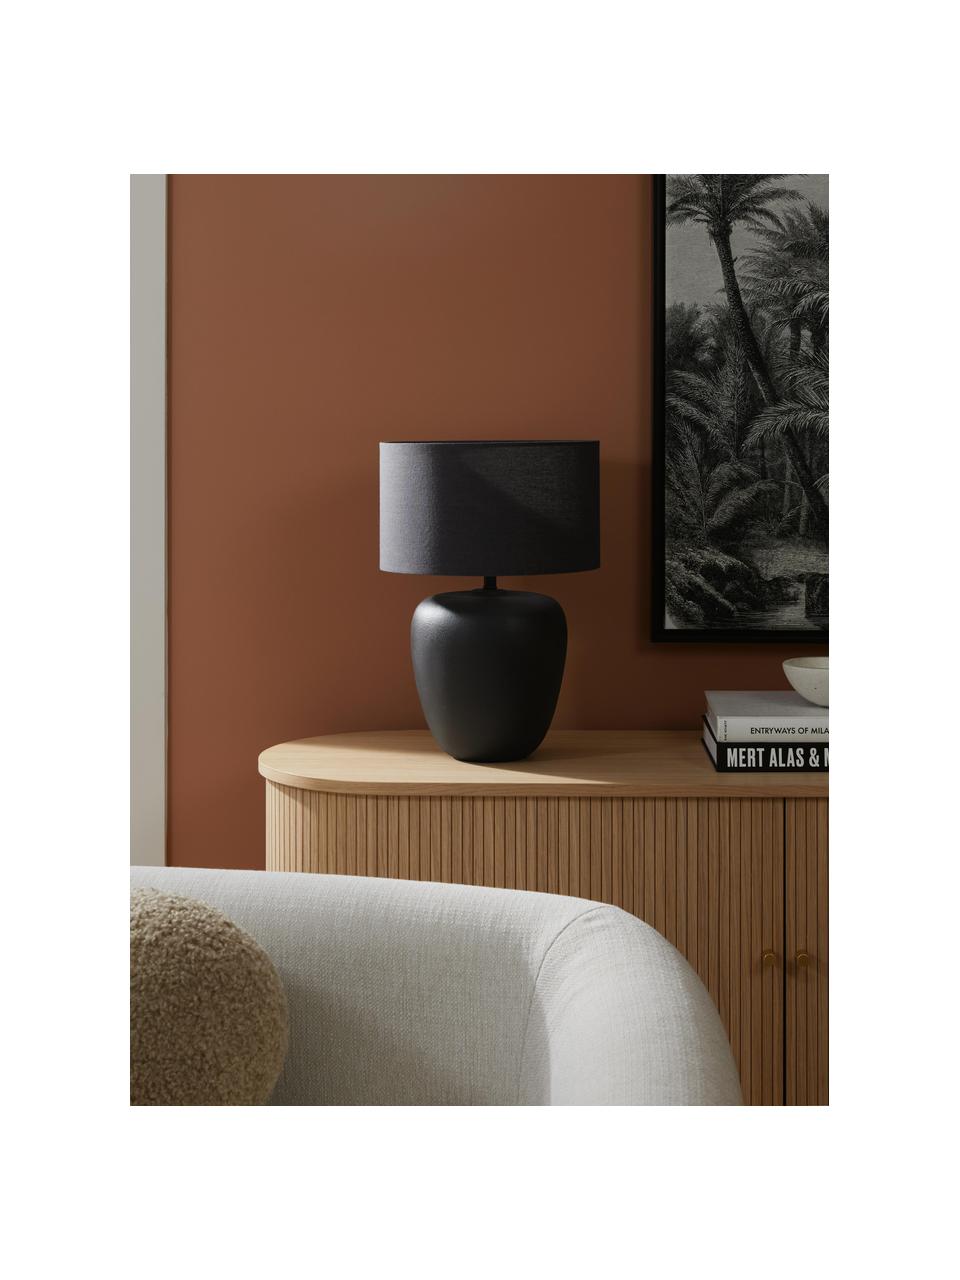 Lámpara de mesa grande de cerámica Eileen, Pantalla: lino (100% poliéster), Cable: cubierto en tela, Negro mate, Ø 33 x Al 48 cm